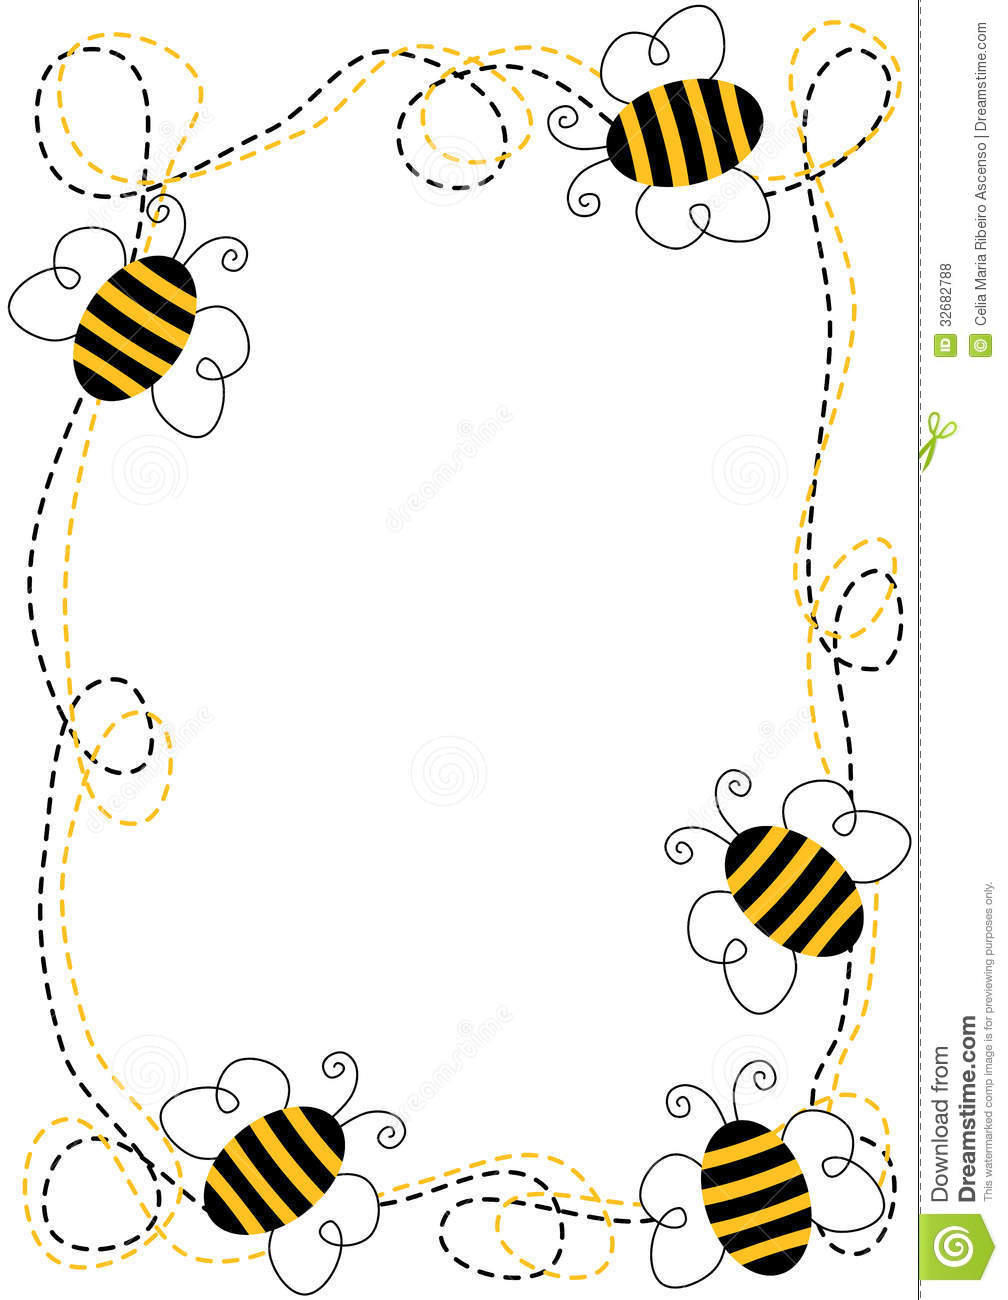 Image Website Graphics Bees